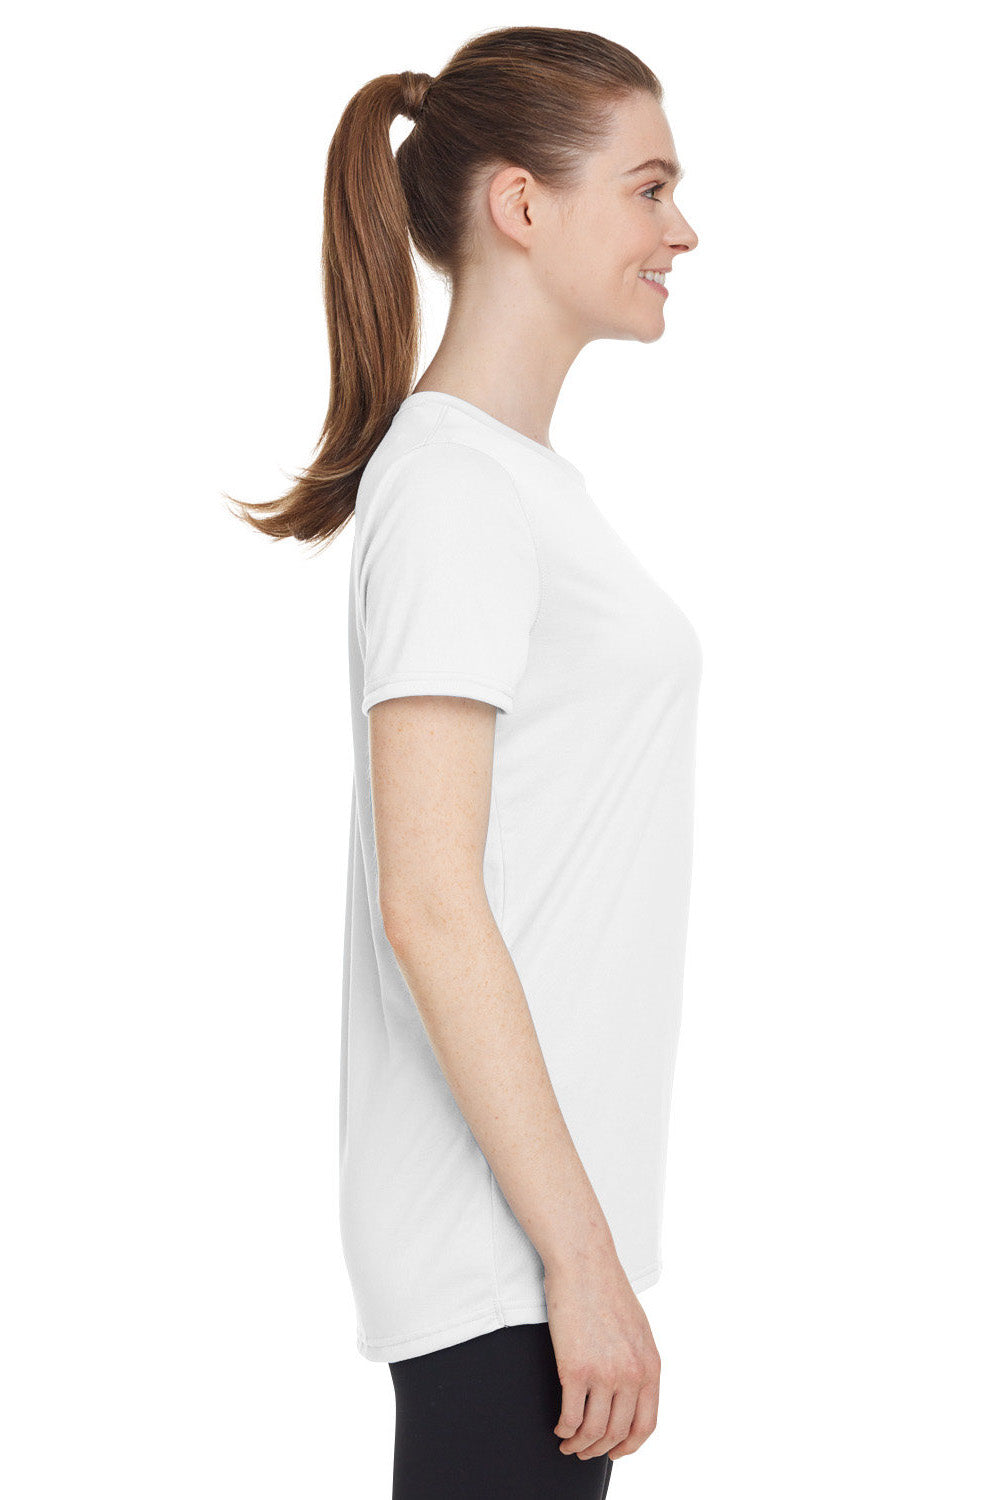 Under Armour 1376847 Womens Team Tech Moisture Wicking Short Sleeve Crewneck T-Shirt White Model Side